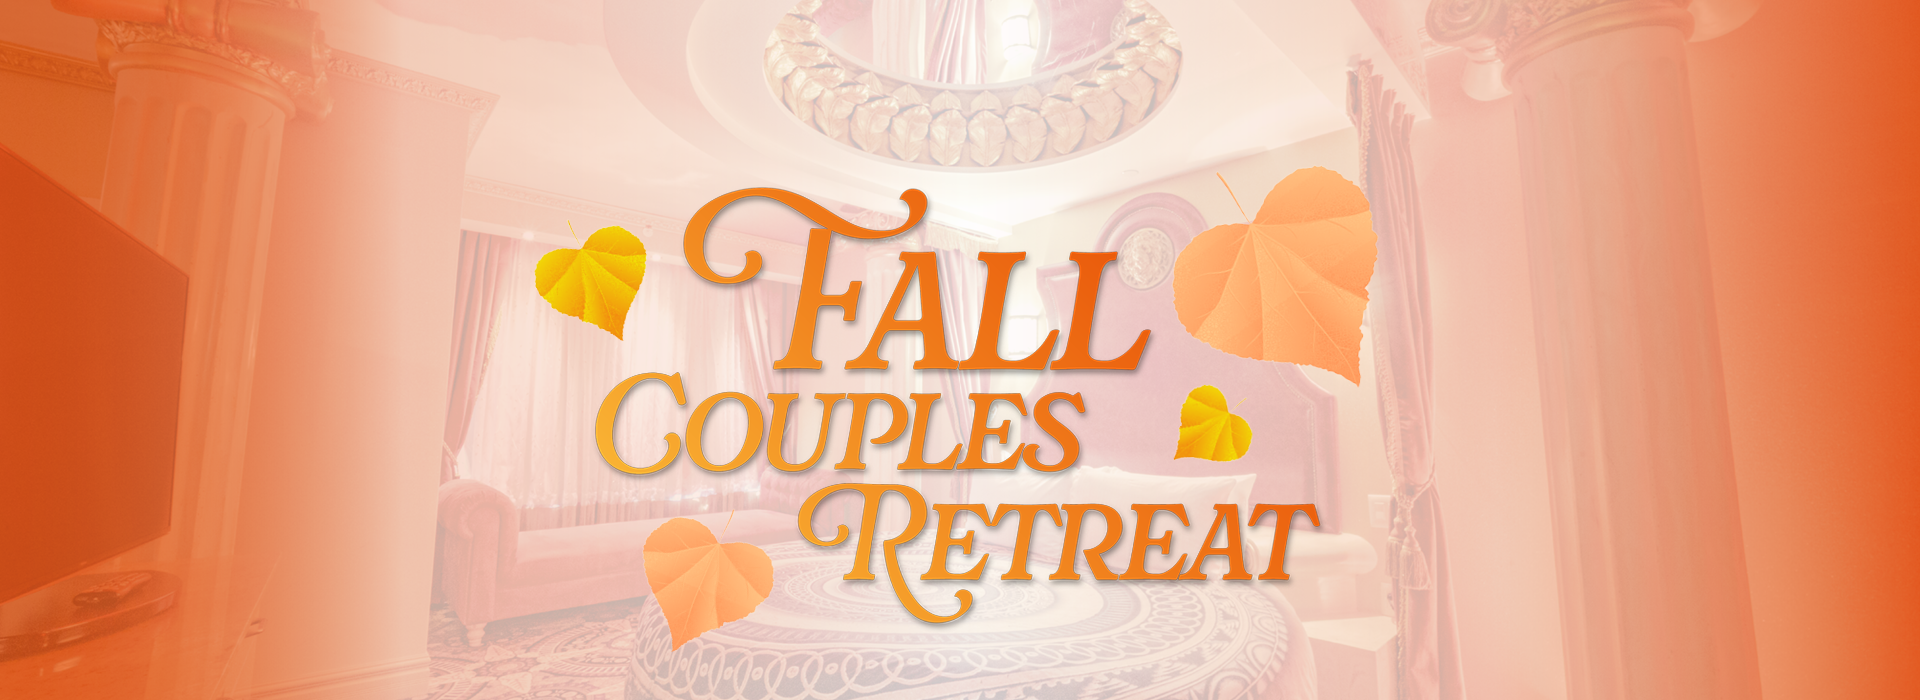 Fall Couples Retreat